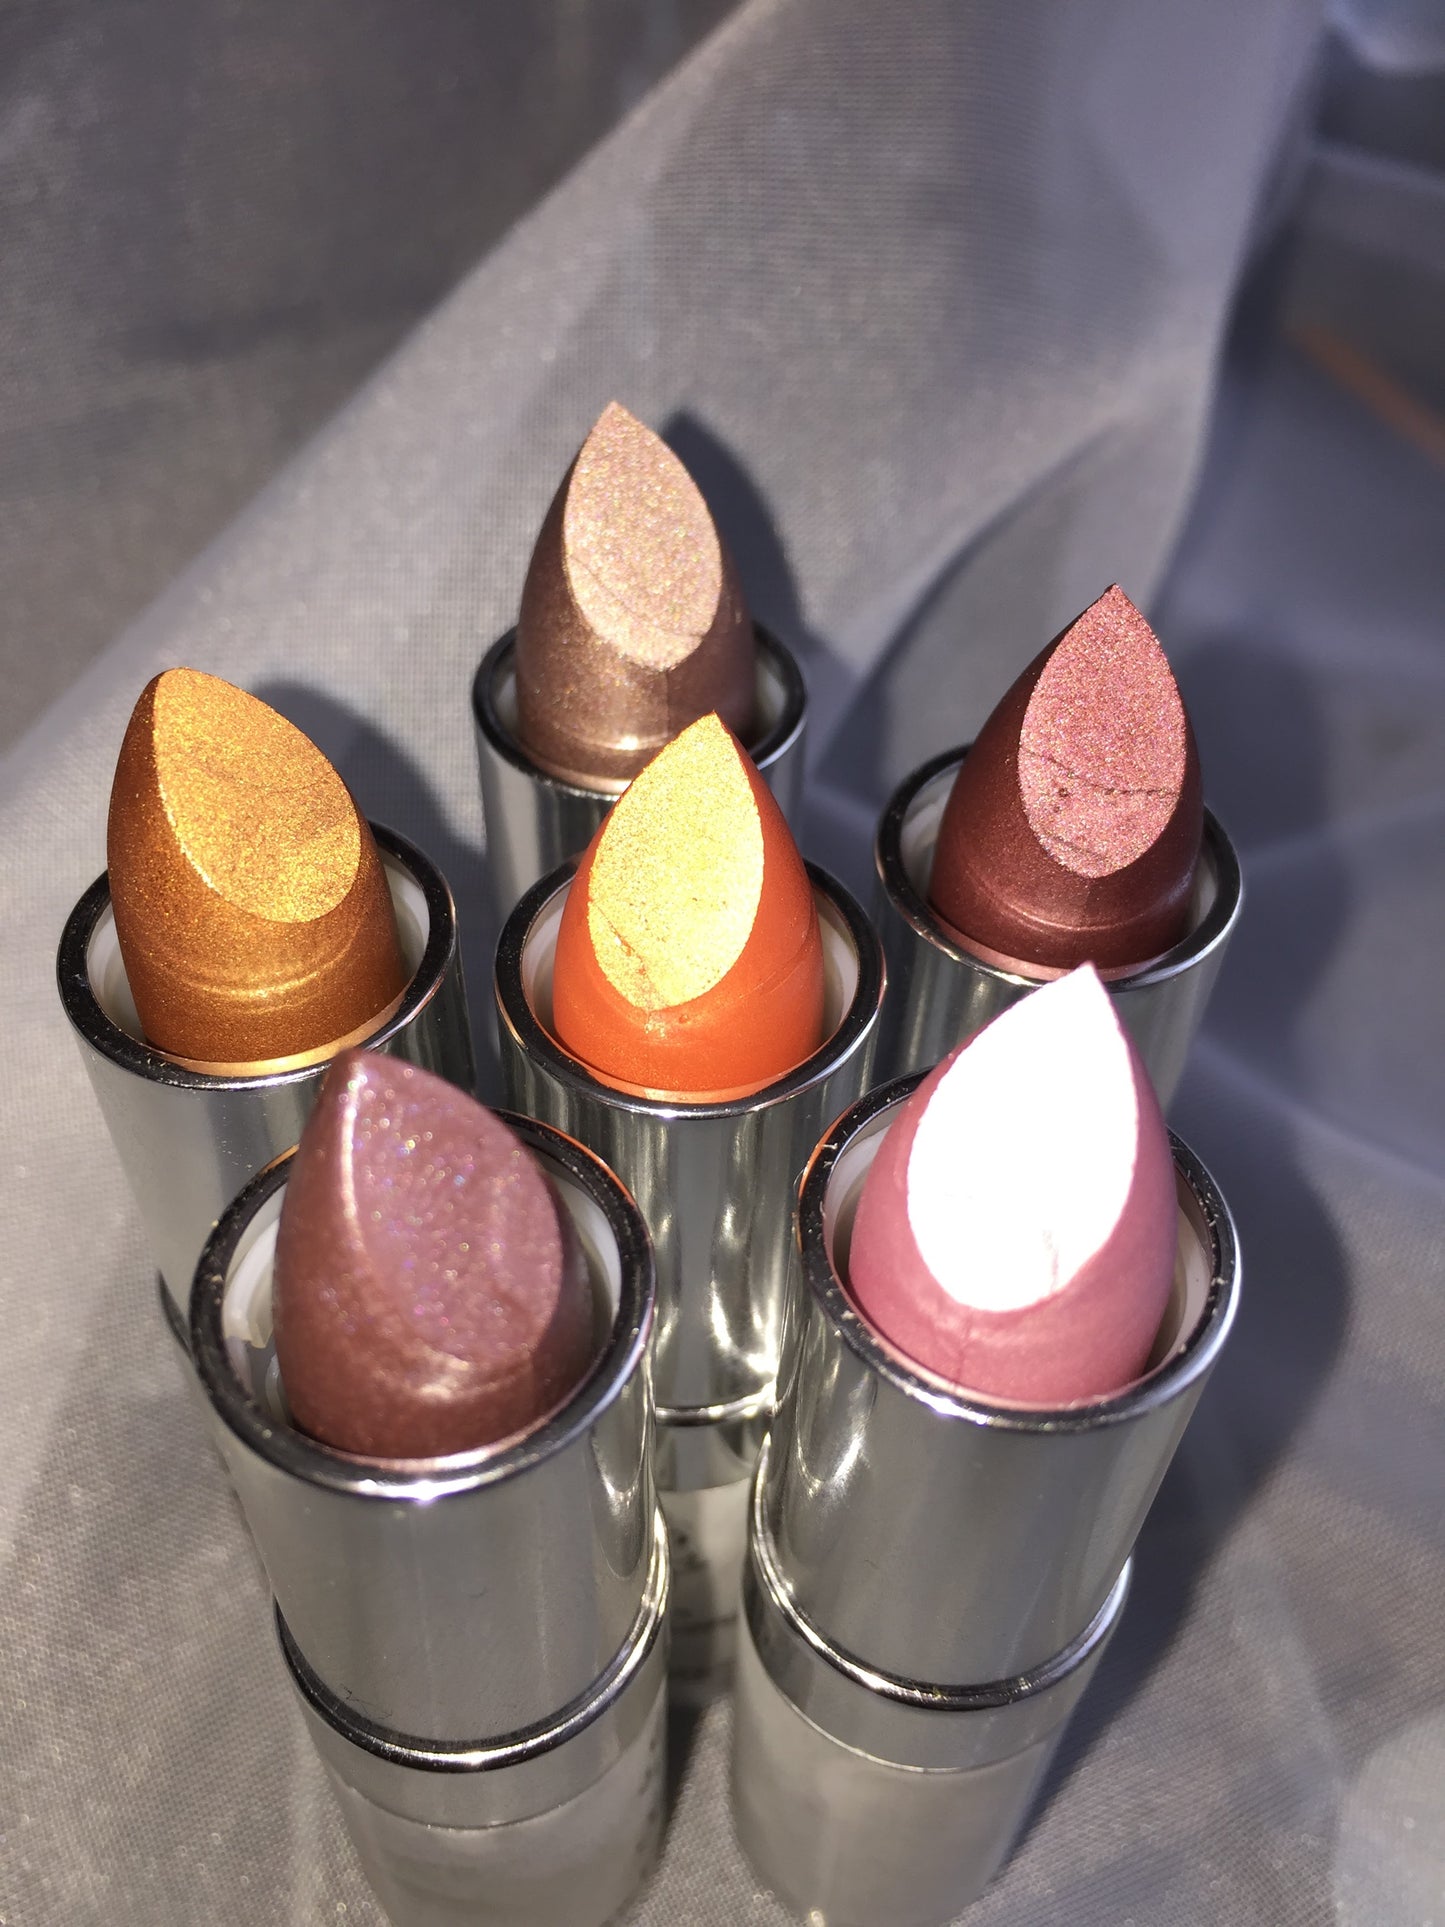 Black Matted, Luxhan Beauty Lipstick